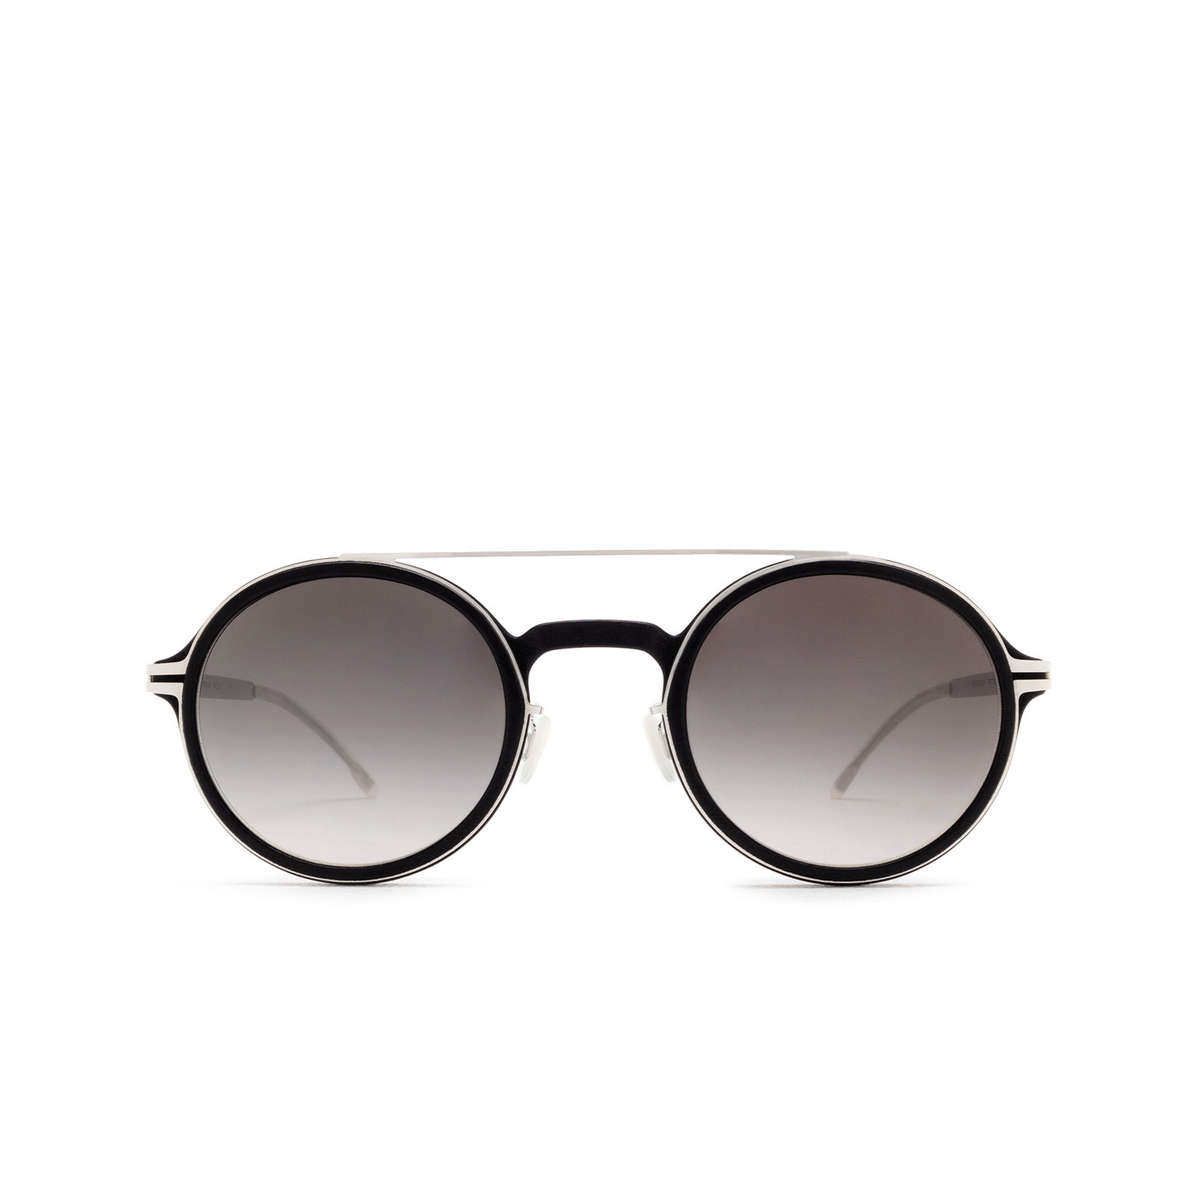 Mykita HEMLOCK Sunglasses 351 Mh22-Pitch Black/Shine Silver - front view